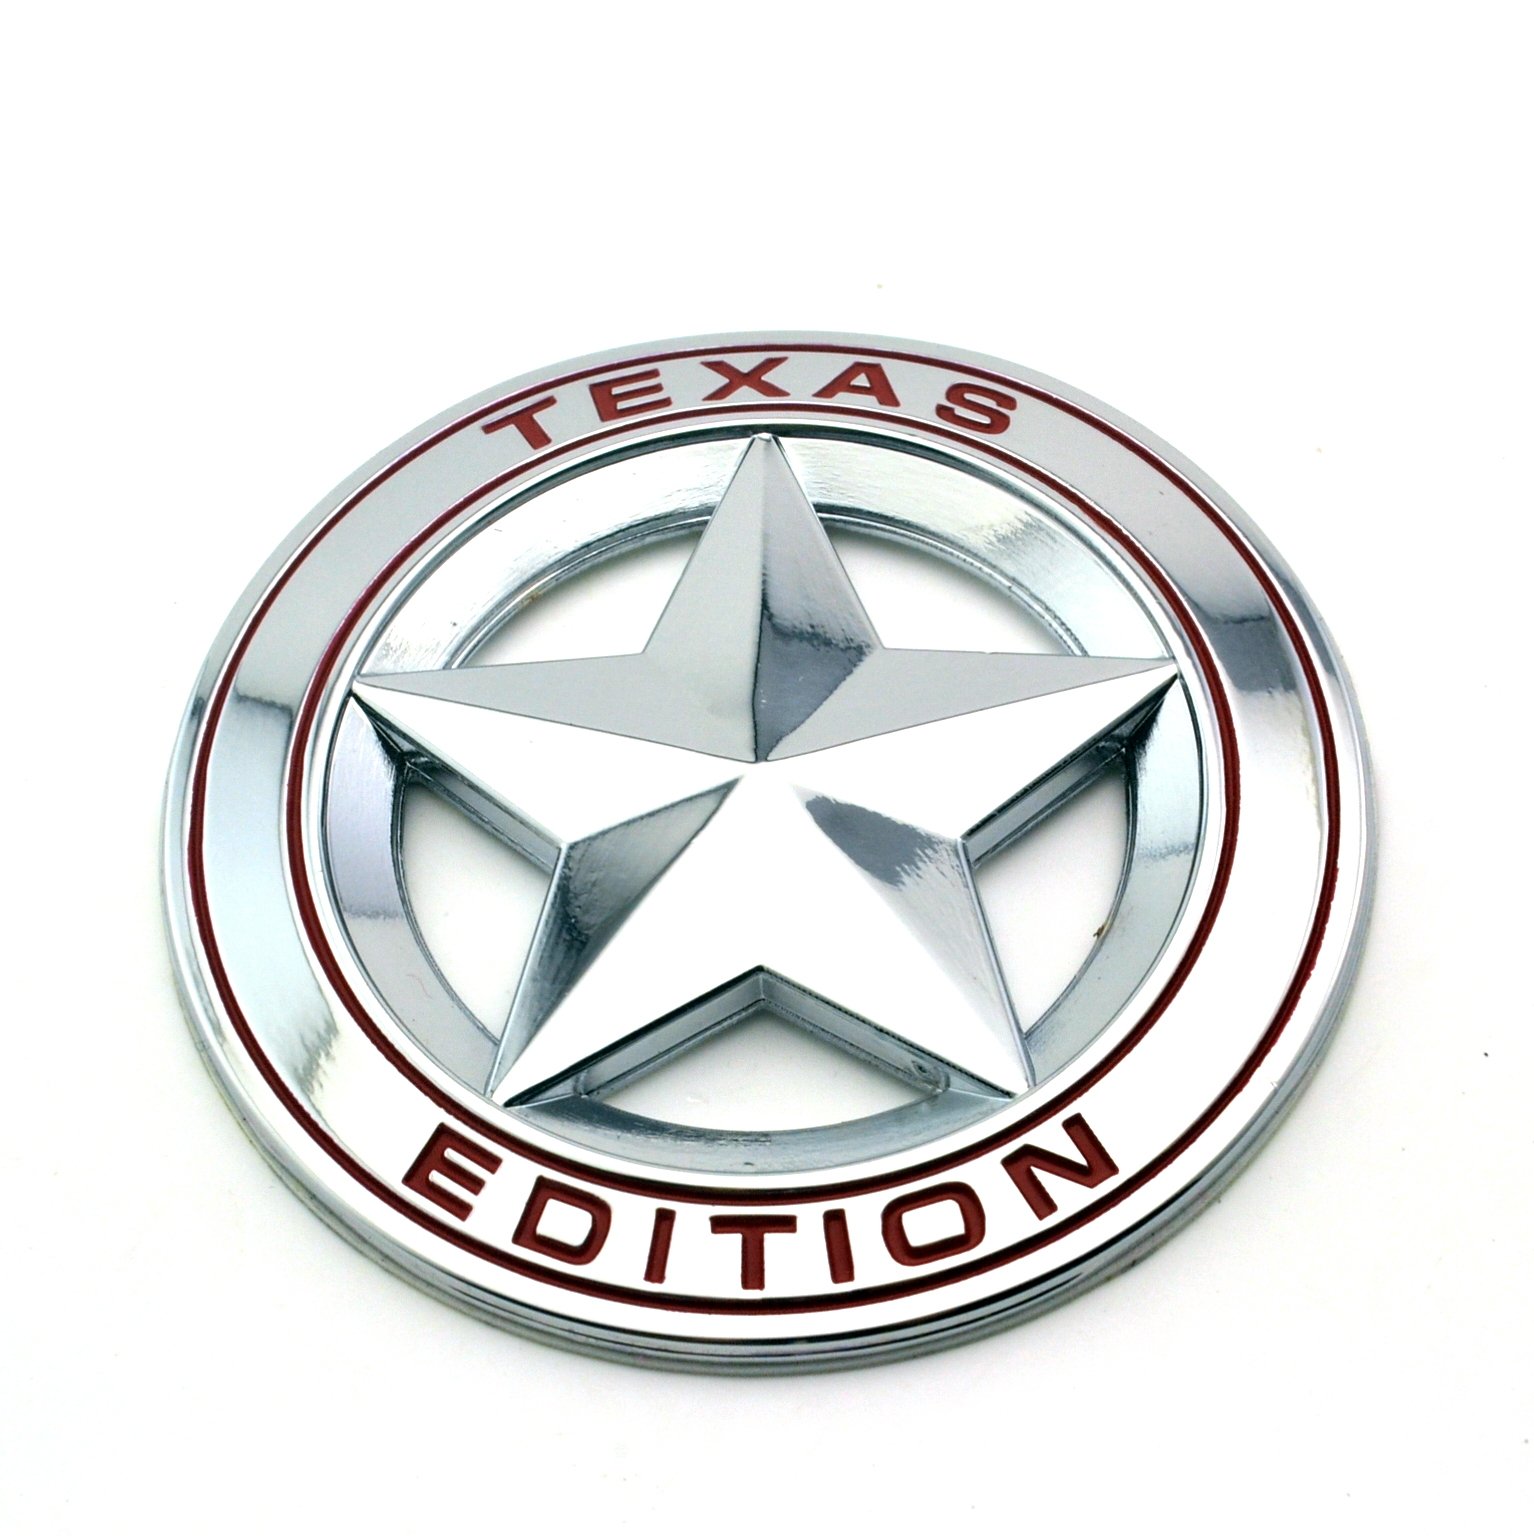 Garage-SixtySix Texas Edition Star Chrom Metall Emblem Aufkleber (rot) von Garage-SixtySix